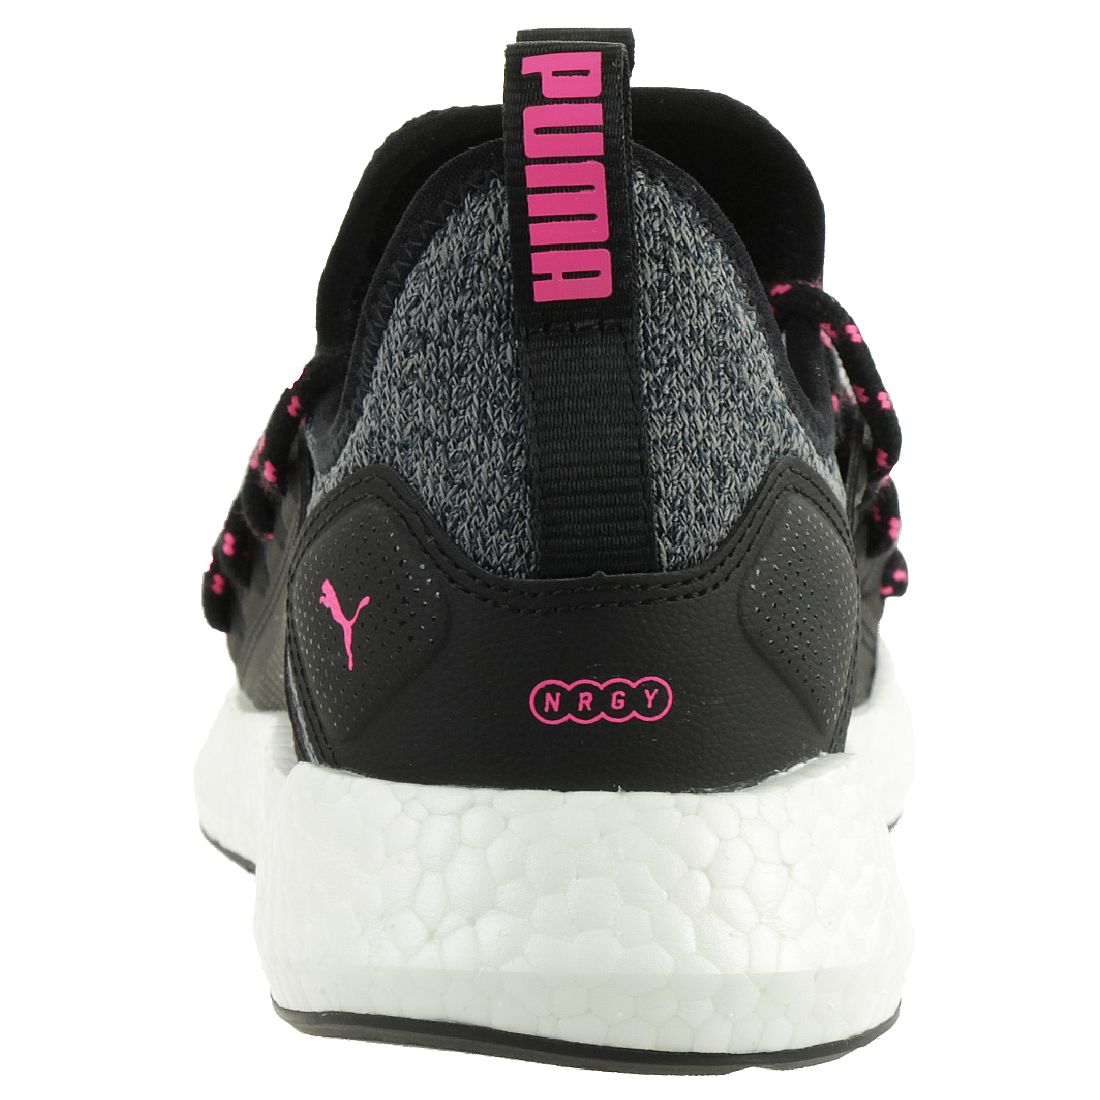 Puma Nrgy Neko Knit Wns Damen Sneaker Fitness schwarz pink 191477 01